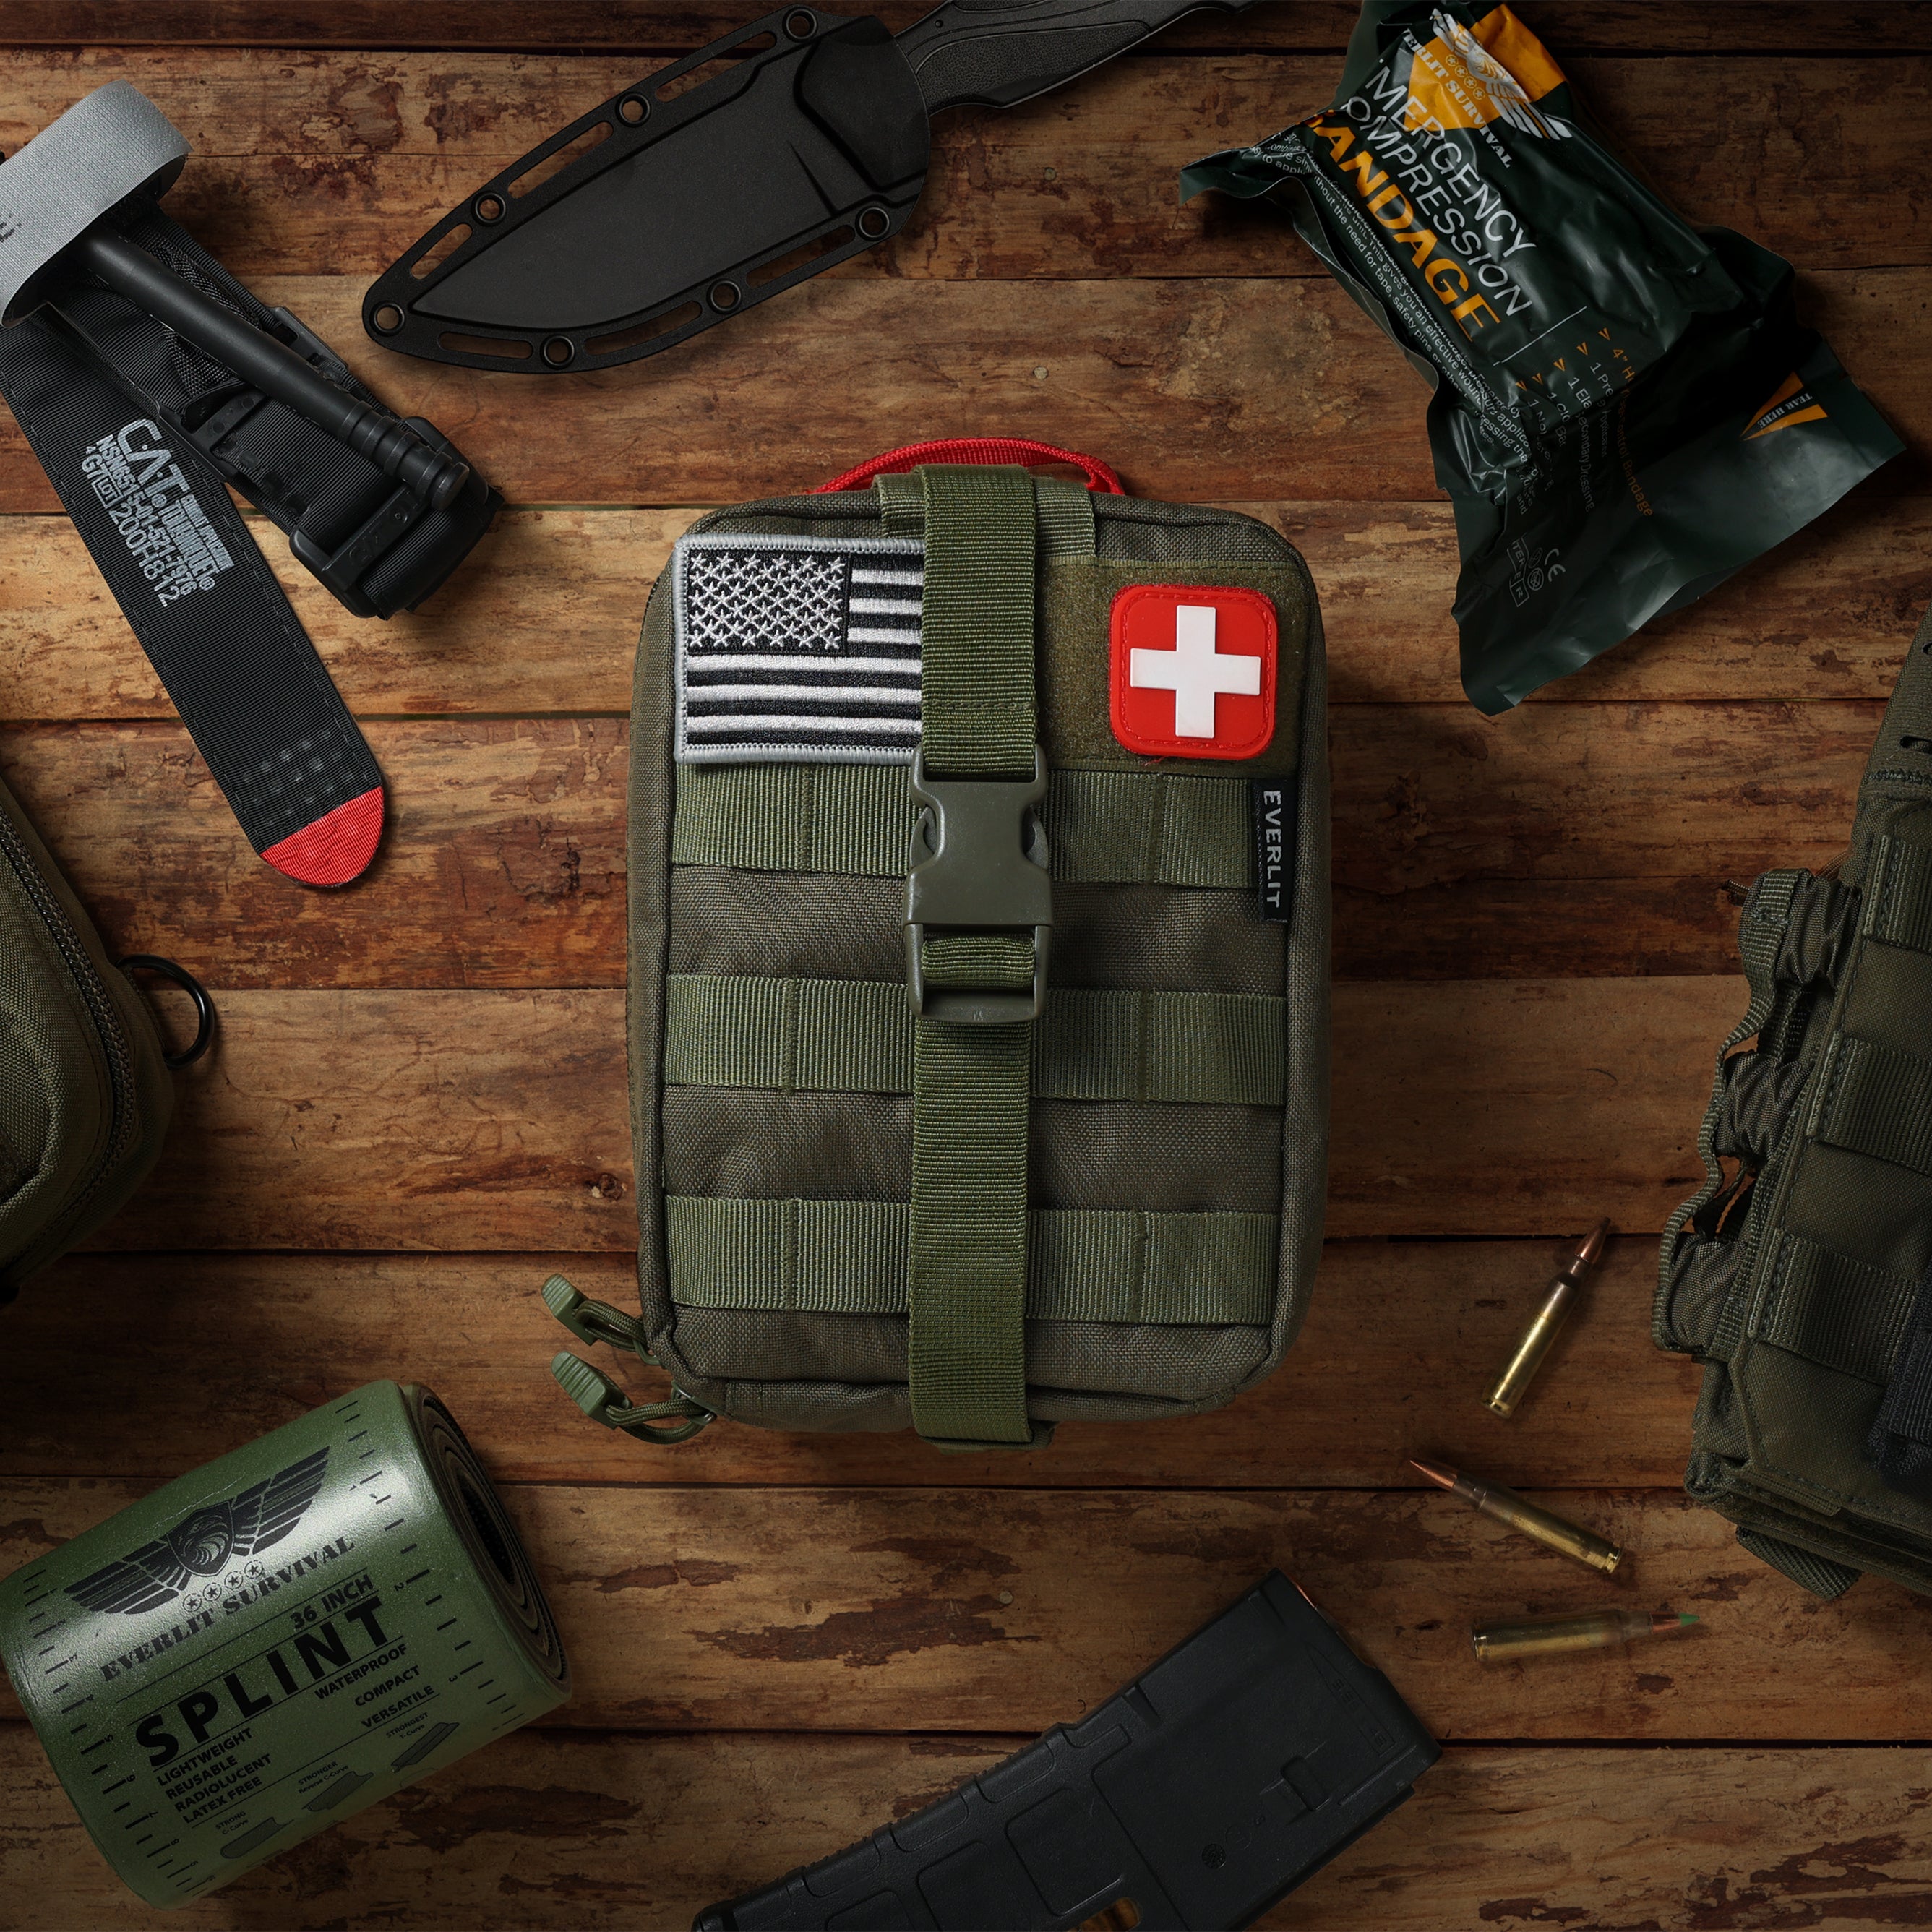 Starter Trauma First Aid Kit: Be Prepared for Emergencies